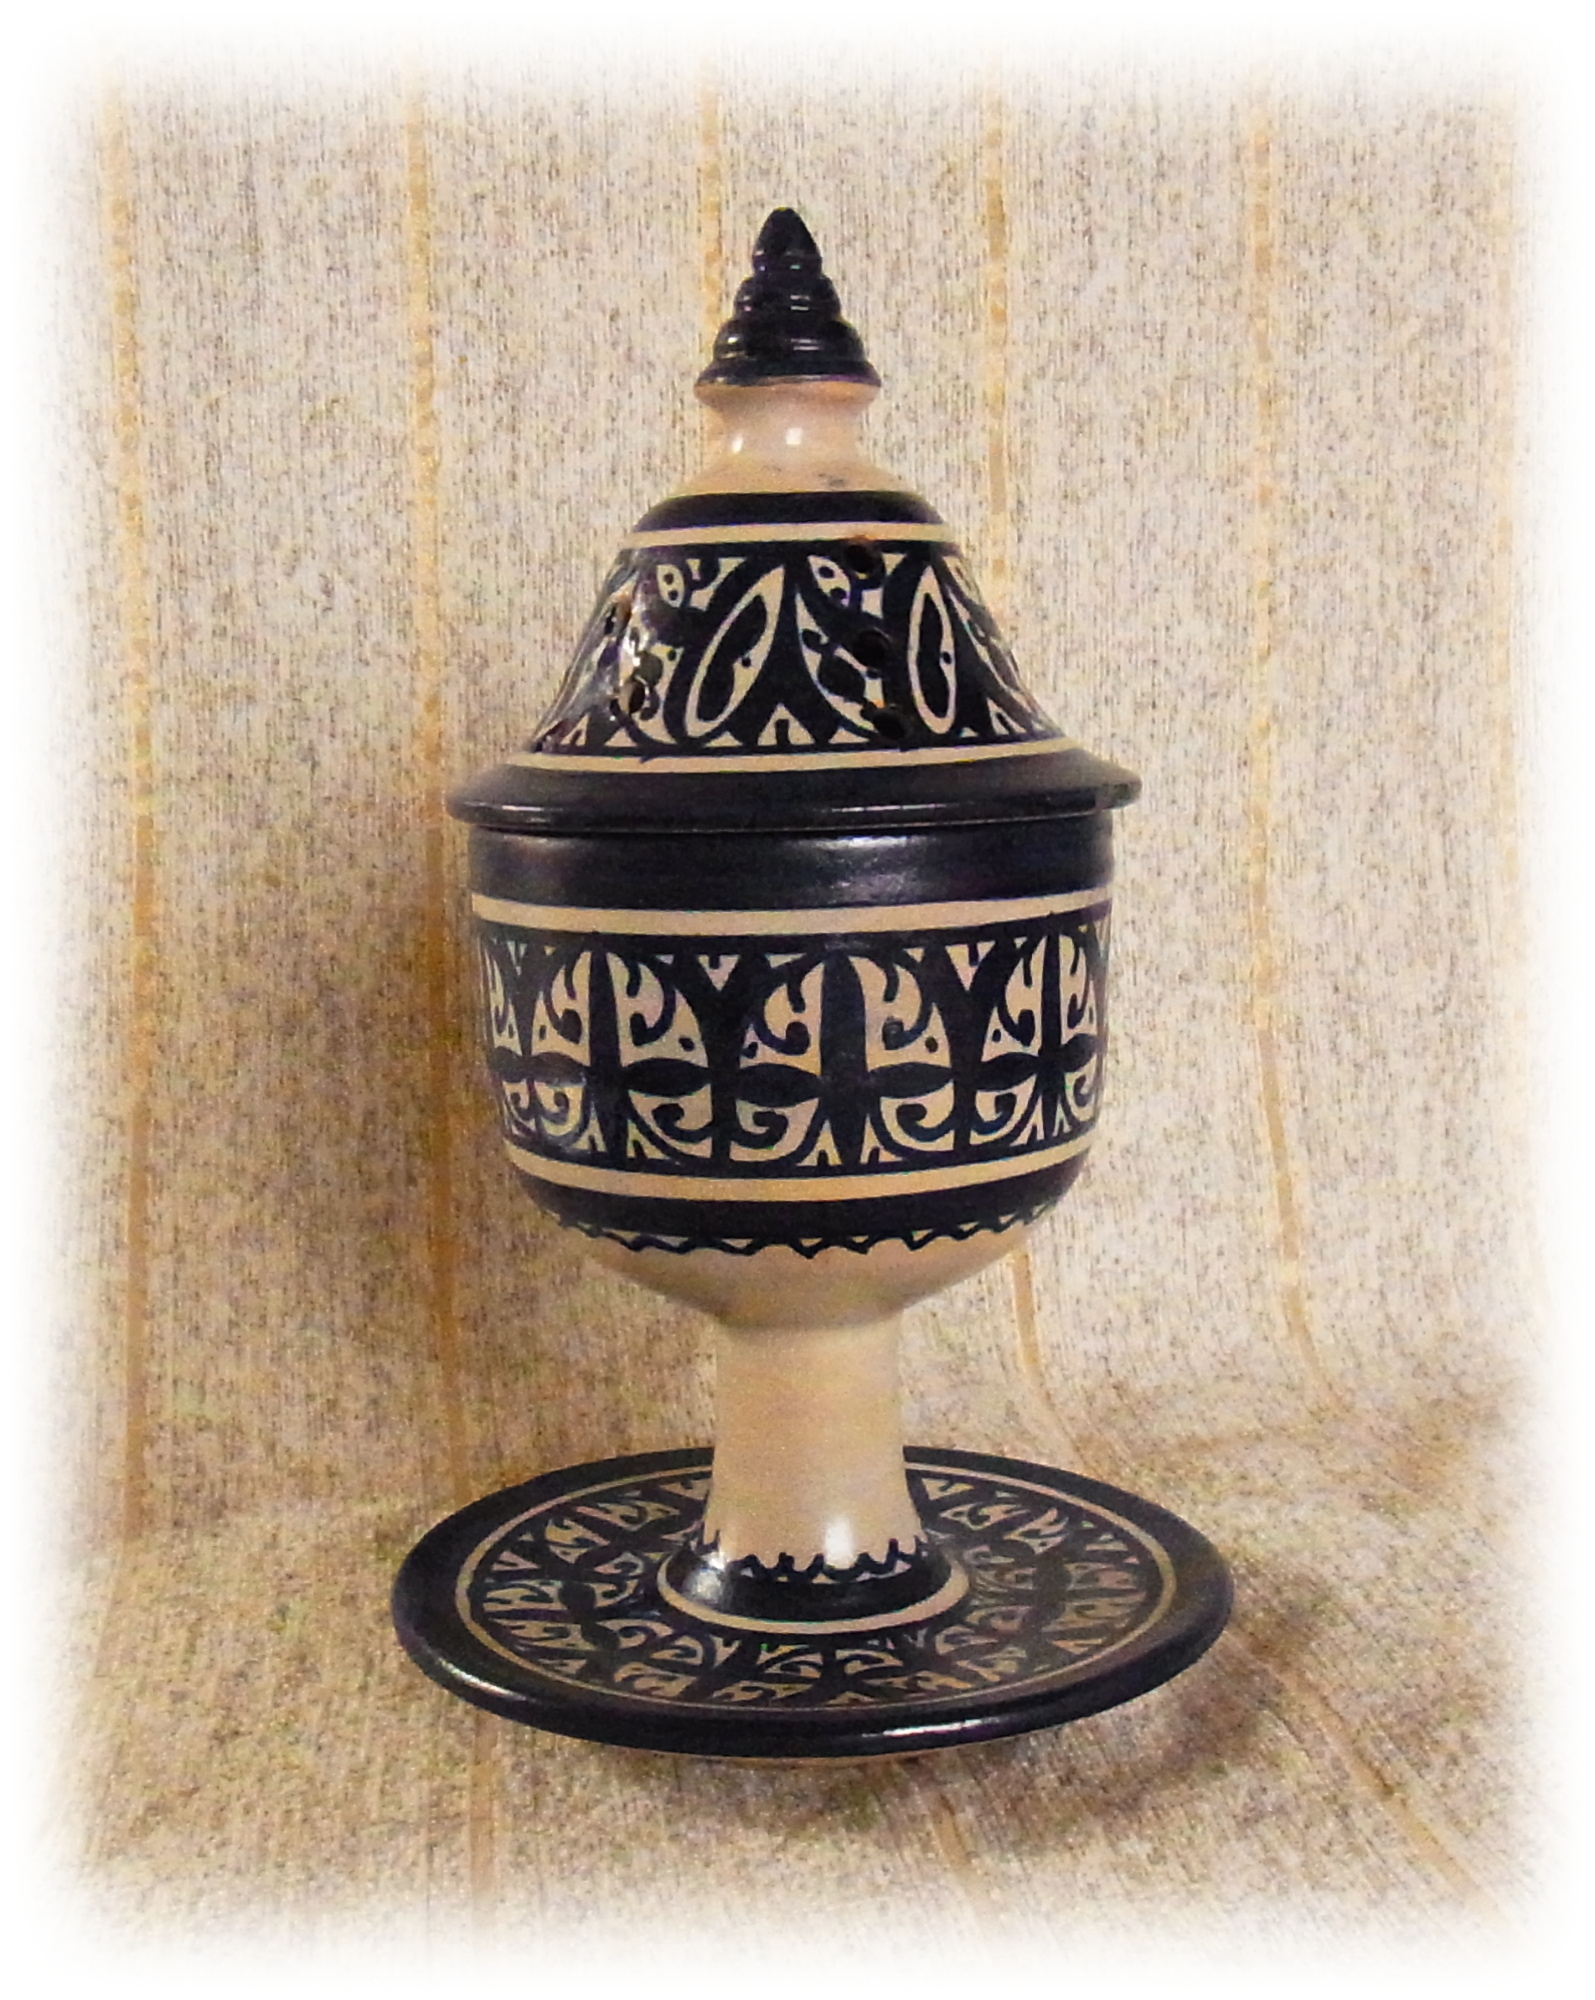 Ceramic Frankincense burner made in Fes